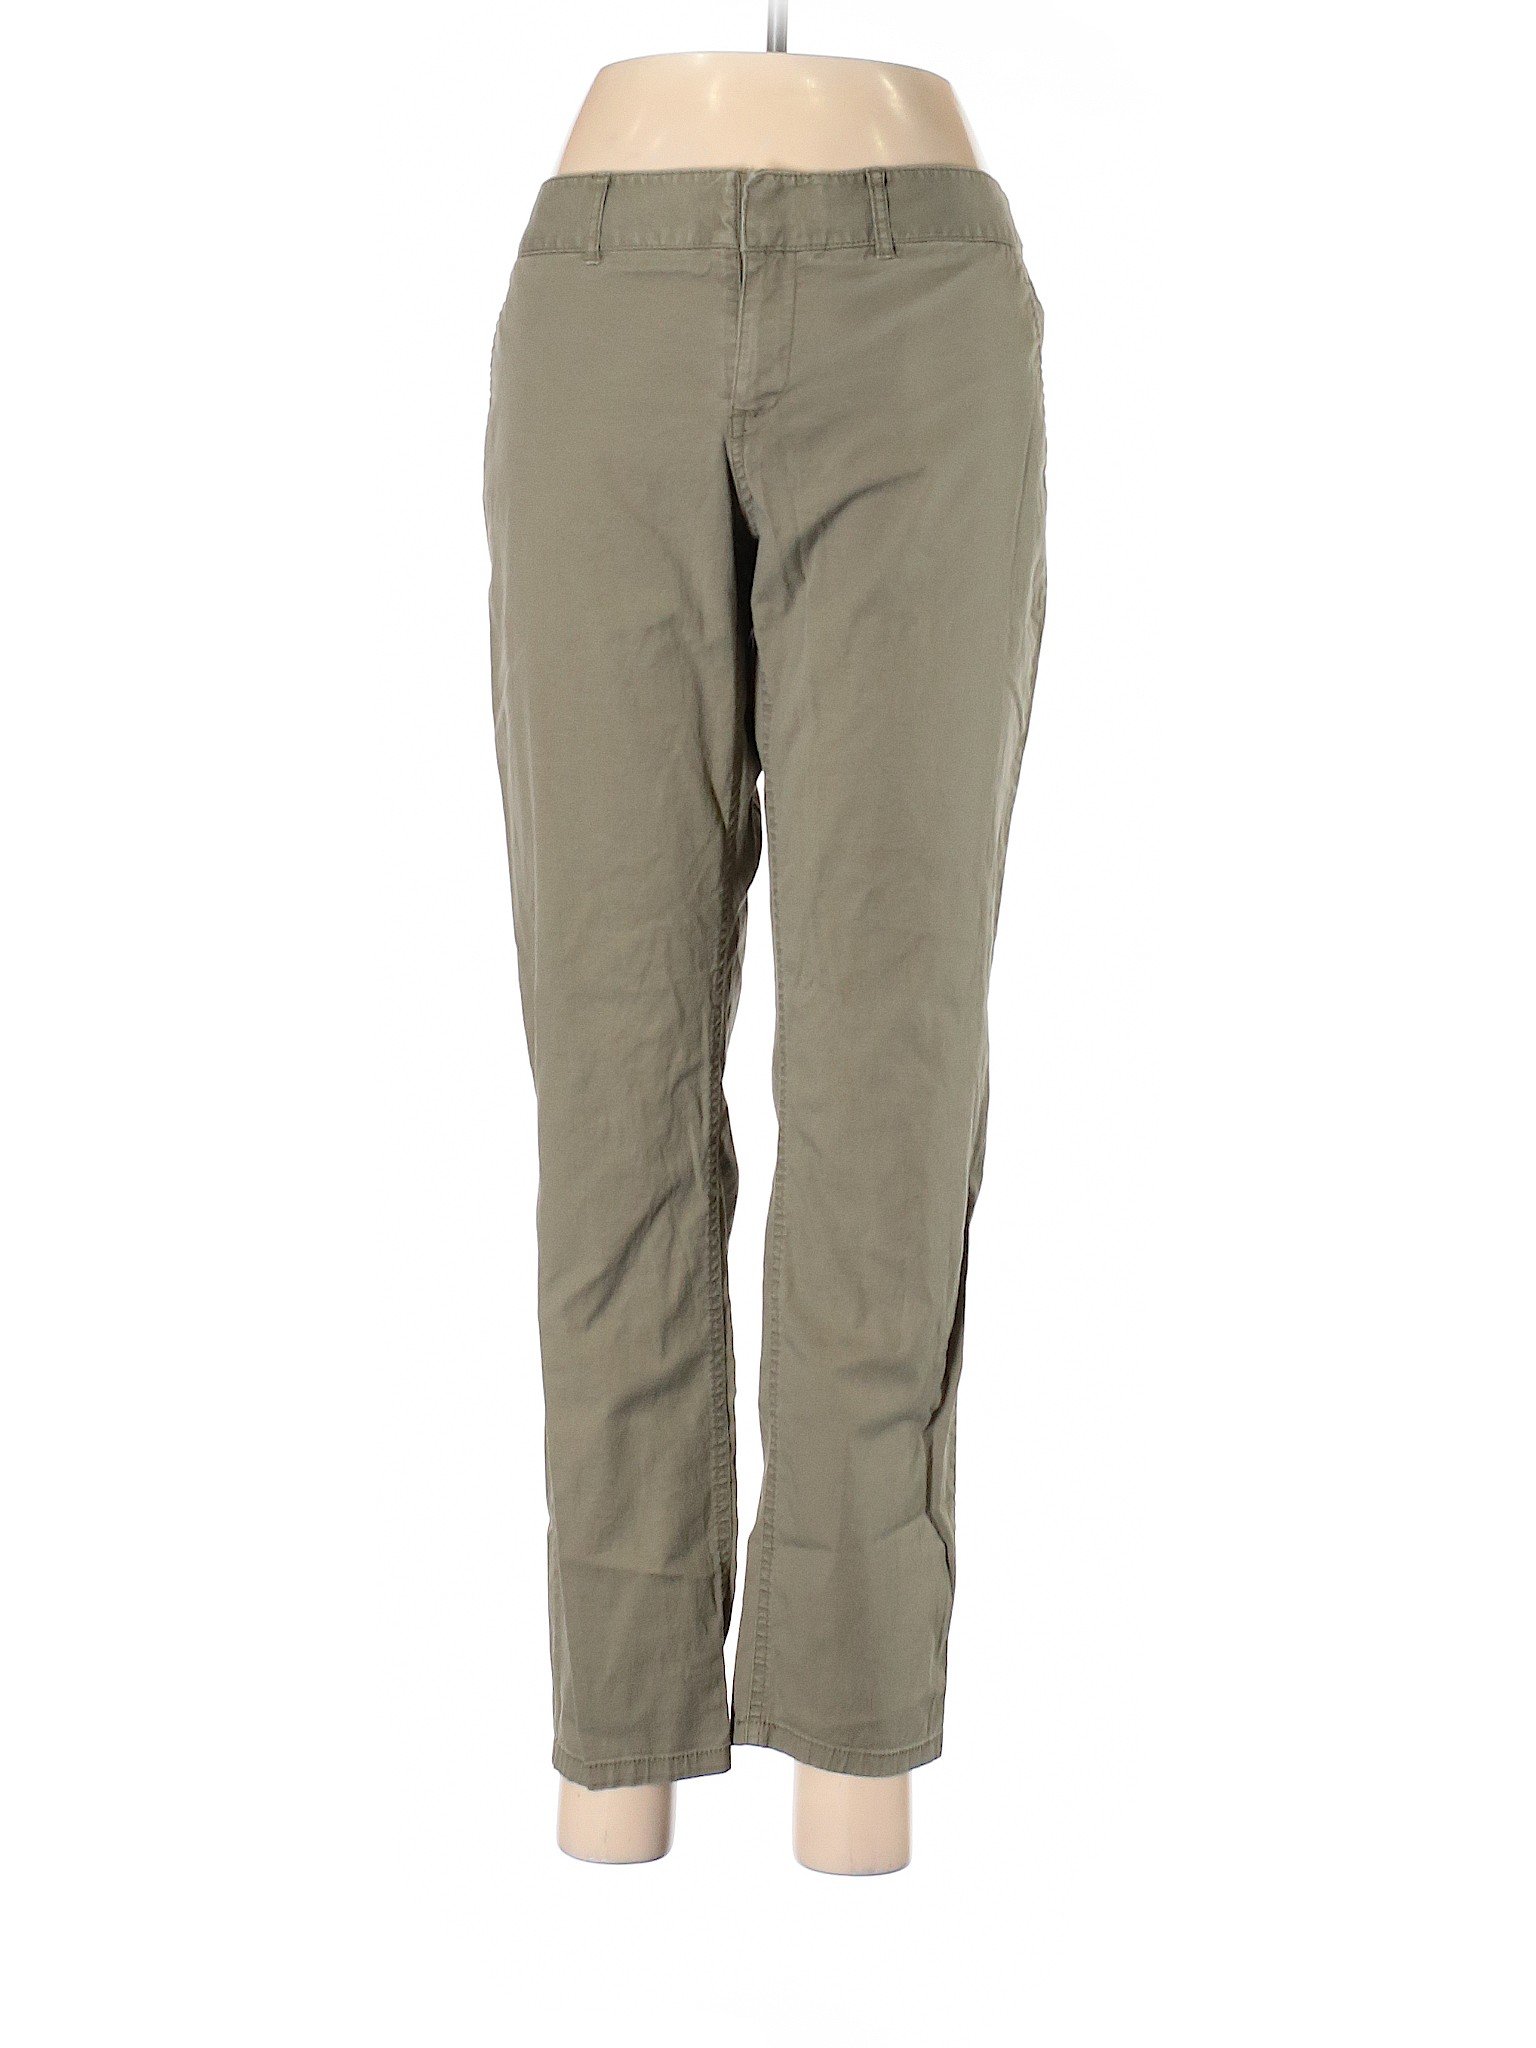 The Limited Women Green Dress Pants 8 | eBay